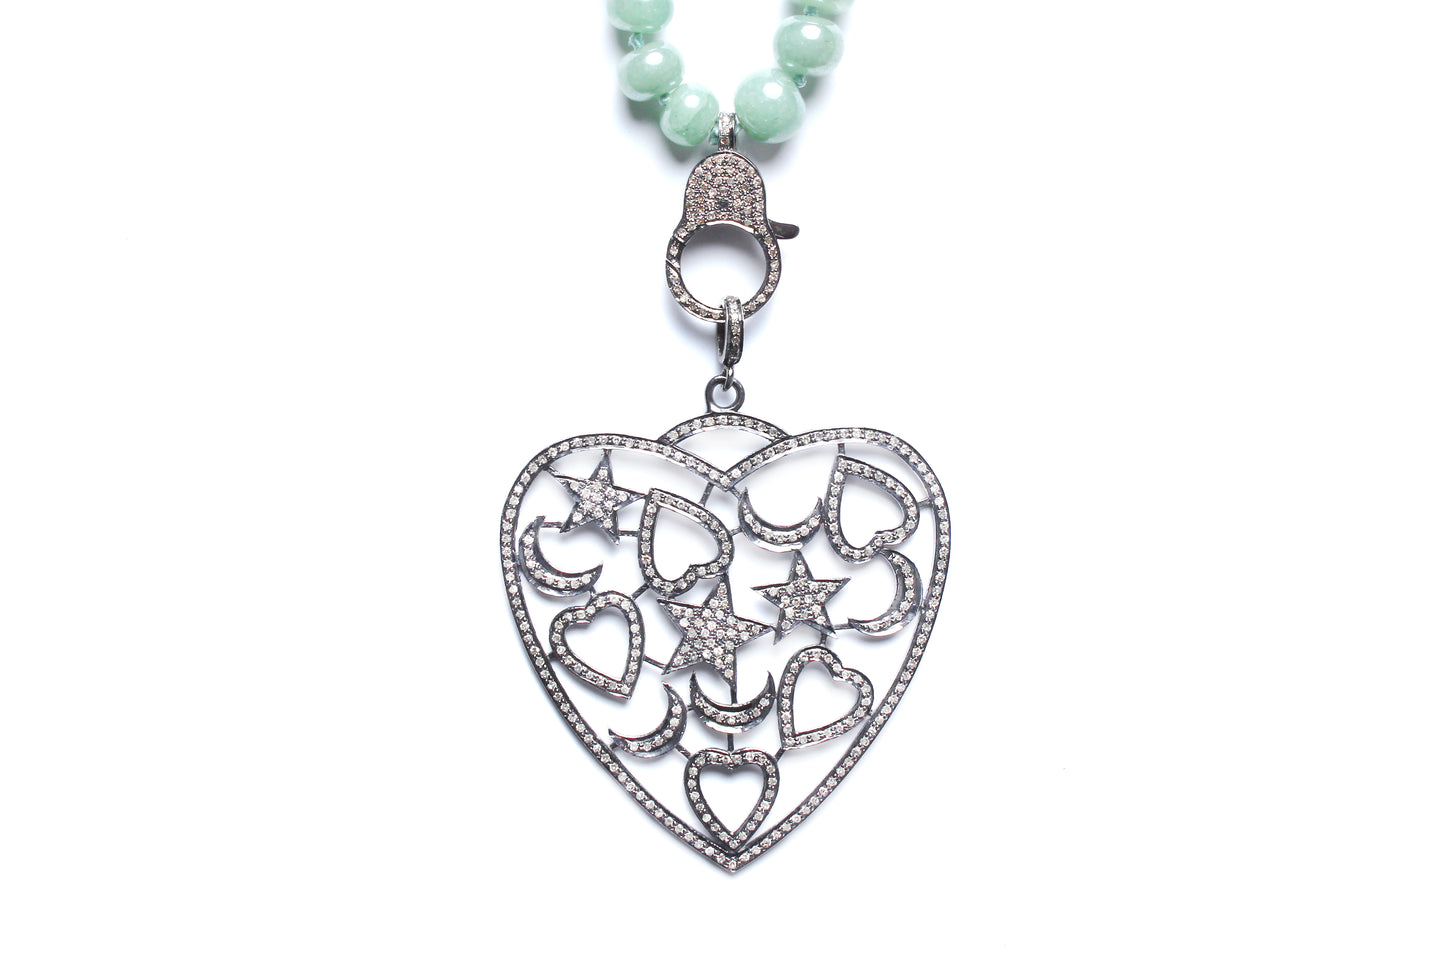 Green Agate, Jade, Diamond Heart Pendant Beaded Necklace